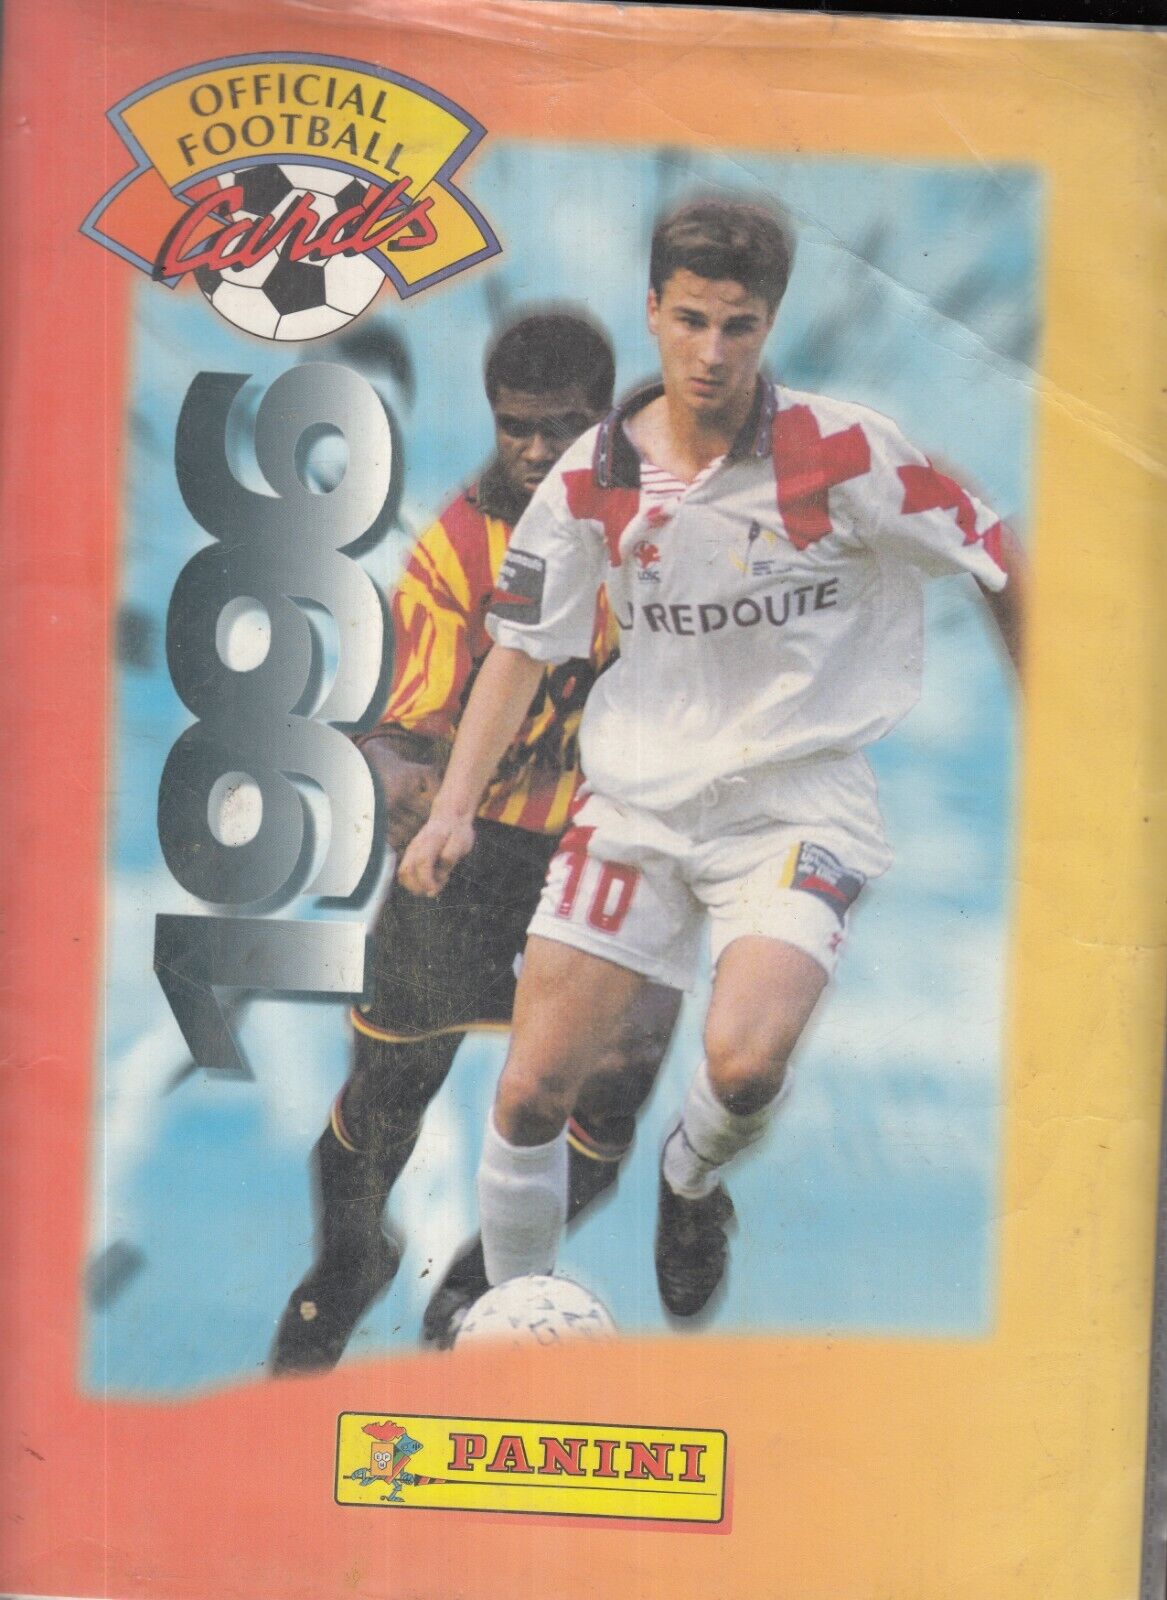 1996 FOOTBALL CARDS LEAGUE 1 OFFICIAL FOOTBALL SANDWICH 1 CARD NO STICKER CHAMPIONSHIP 